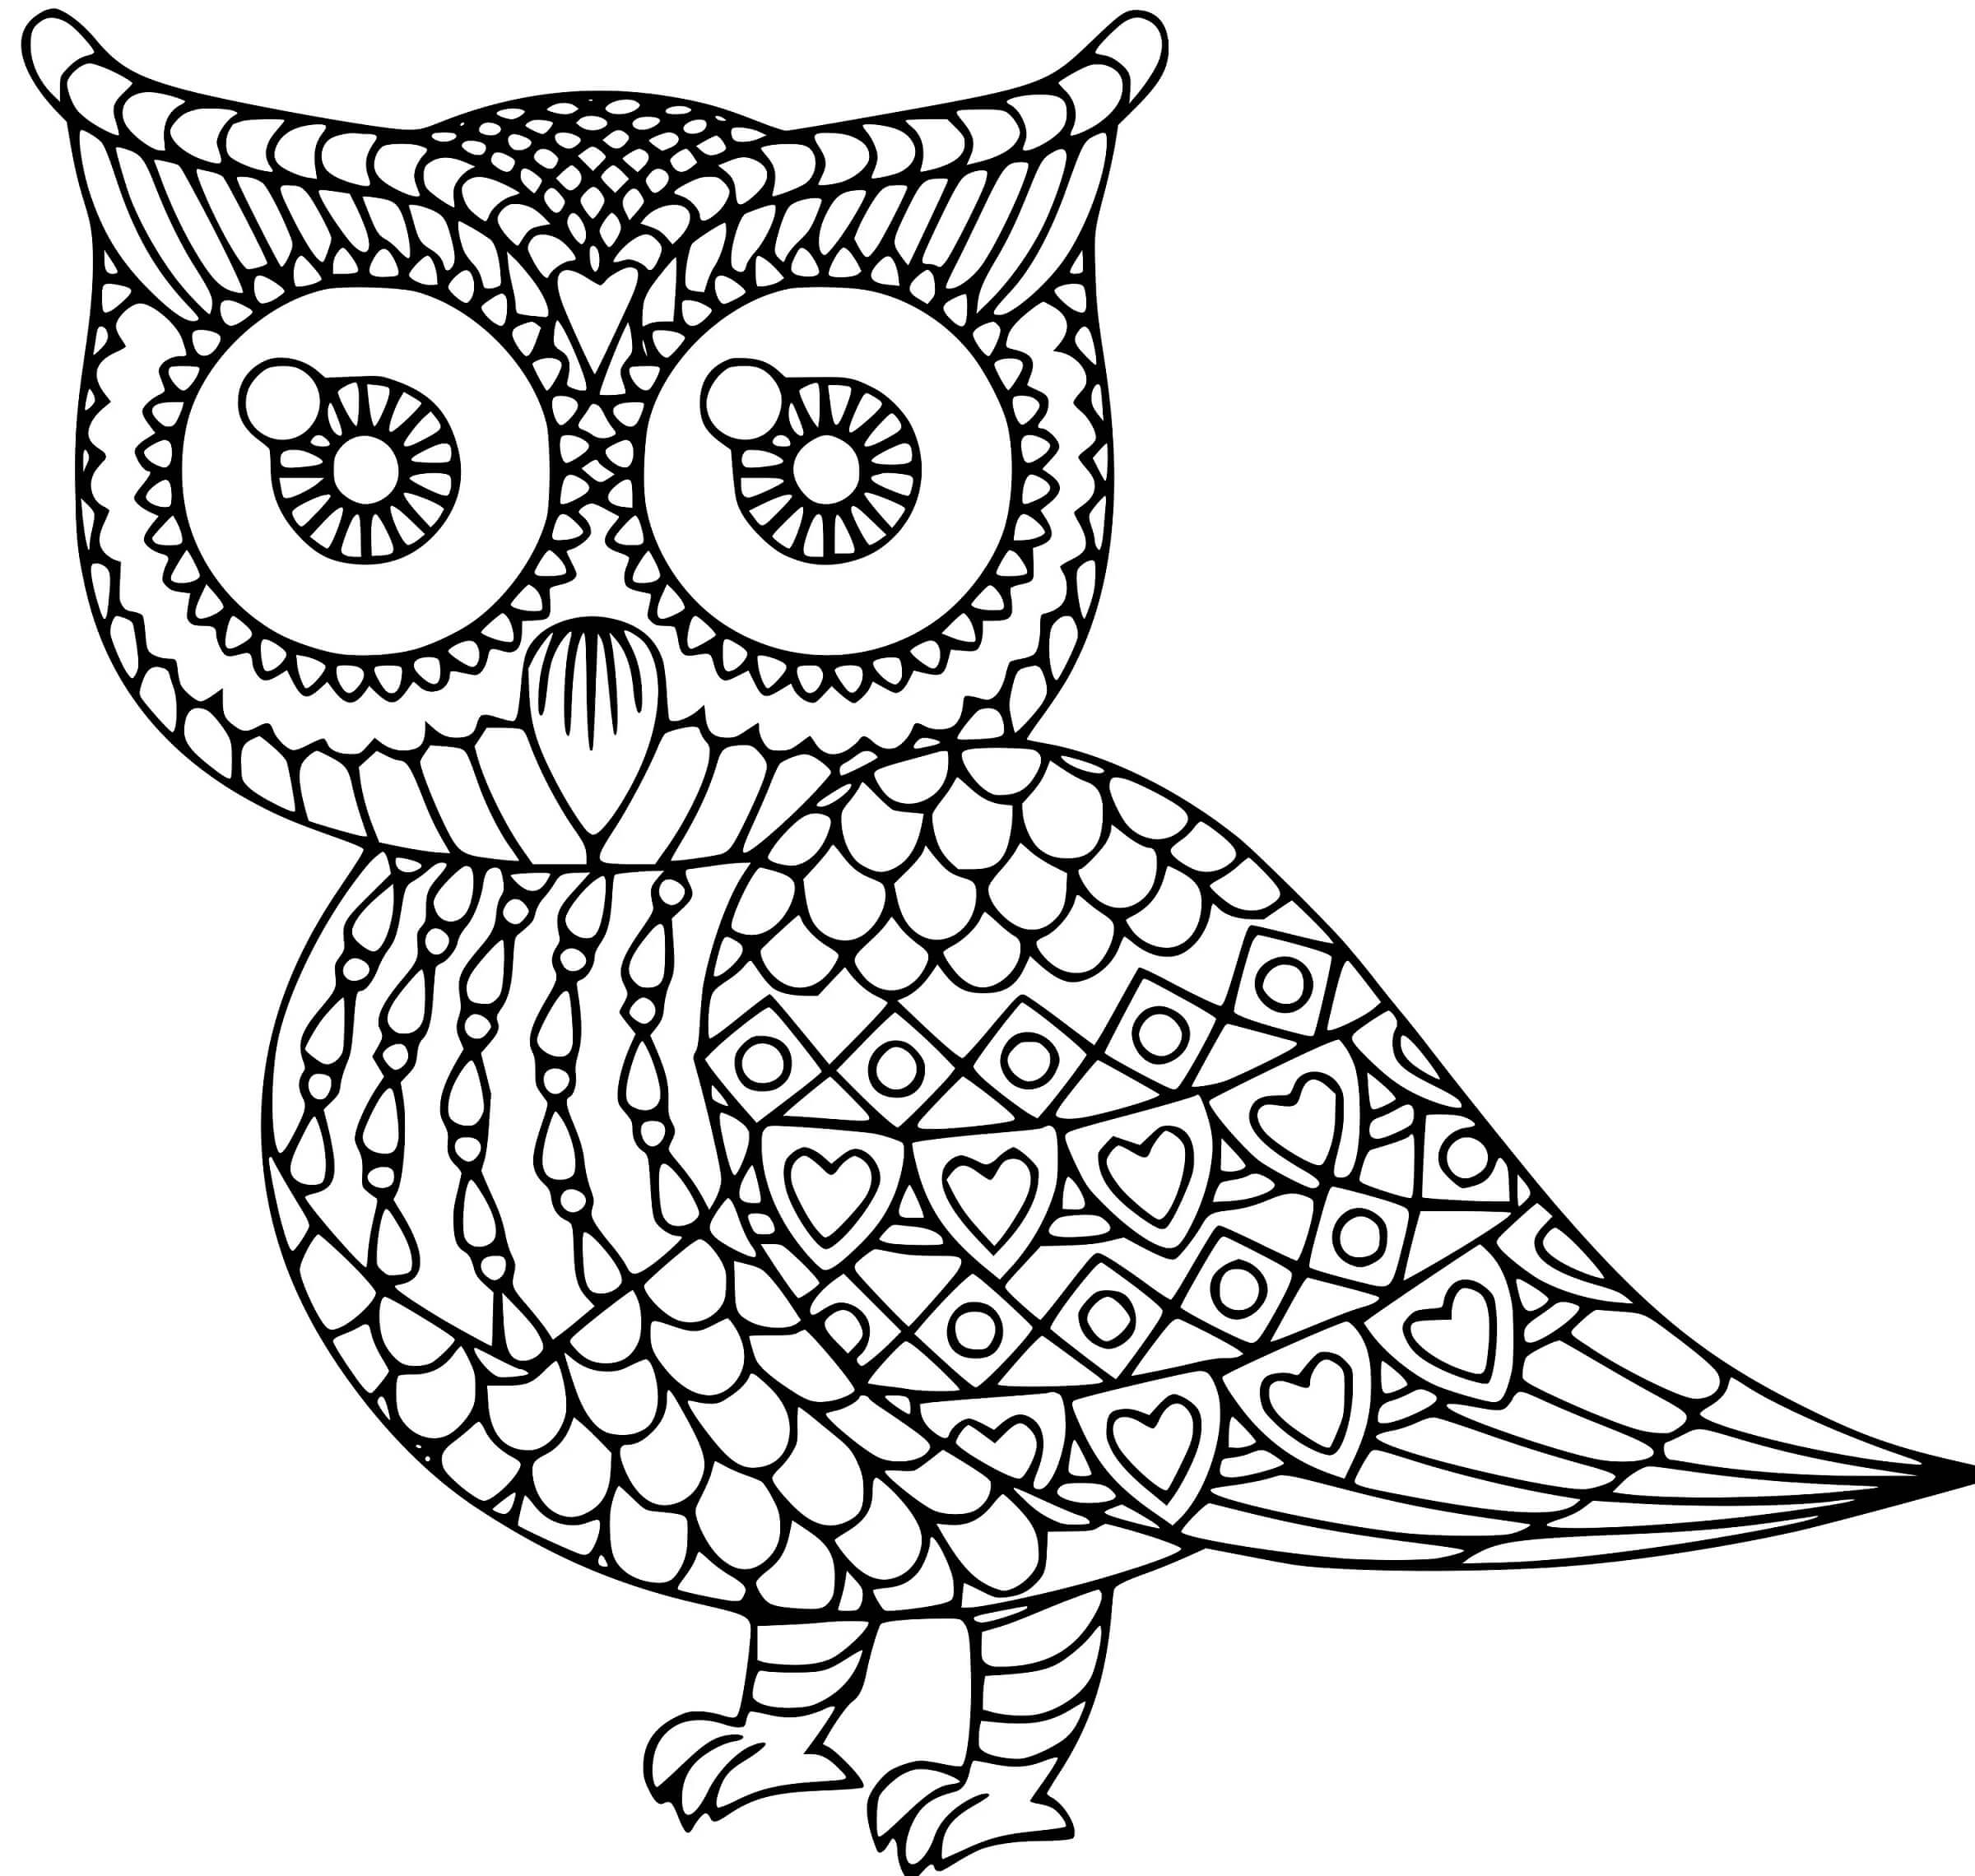 Mandala Owl Coloring Page - Sheet 3 Mandalas